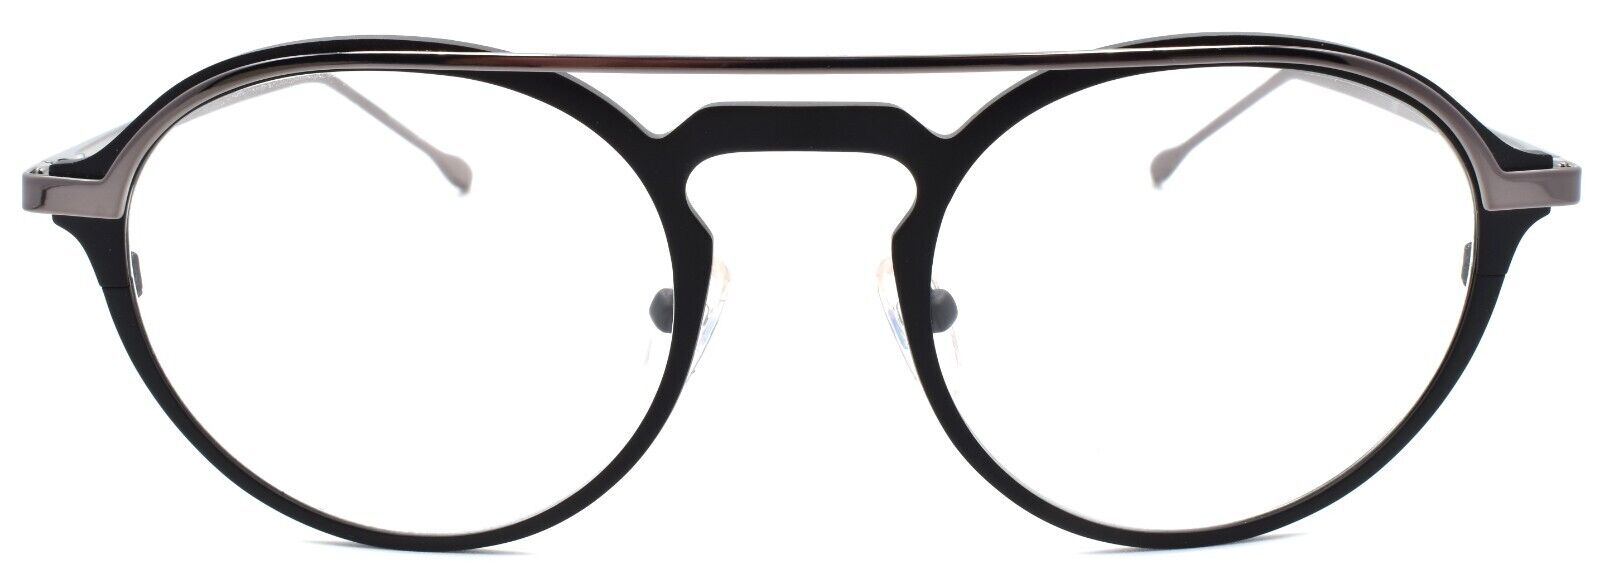 2-John Varvatos V160 Men's Eyeglasses Aviator 50-21-140 Matte Black Japan-751286305432-IKSpecs